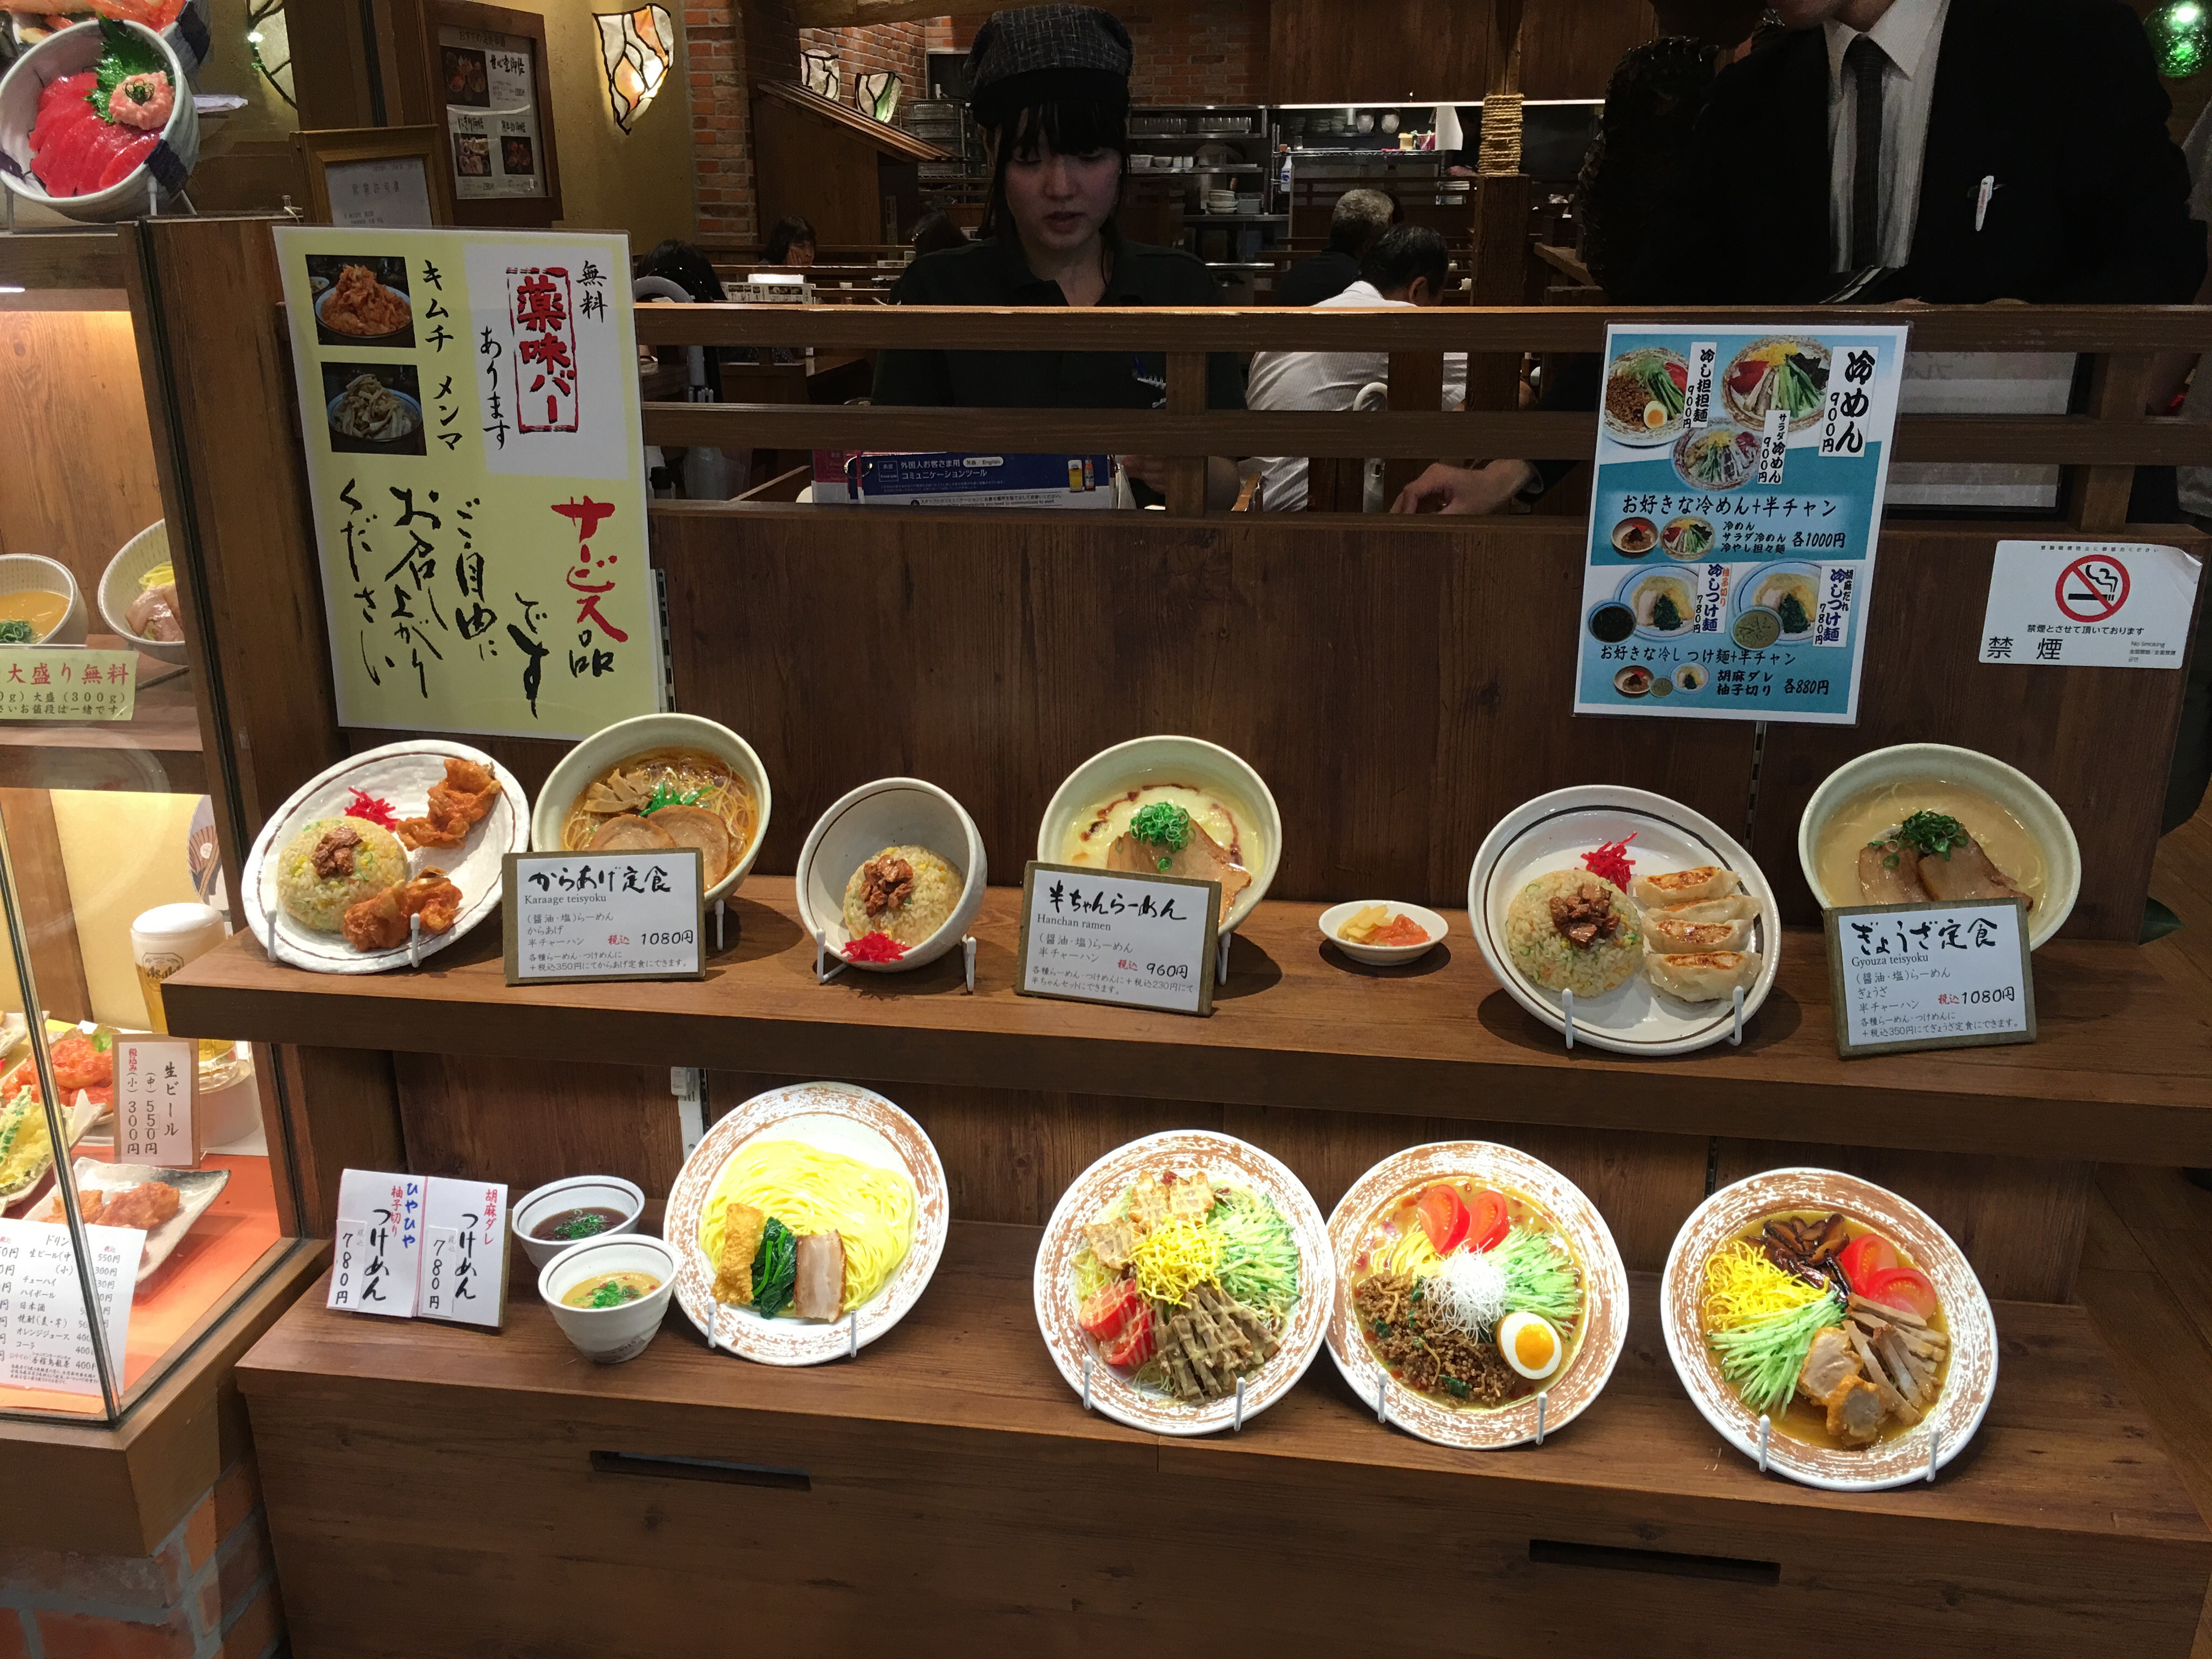 Dinner in food pavillion under Kyoto  Station  catsfoods